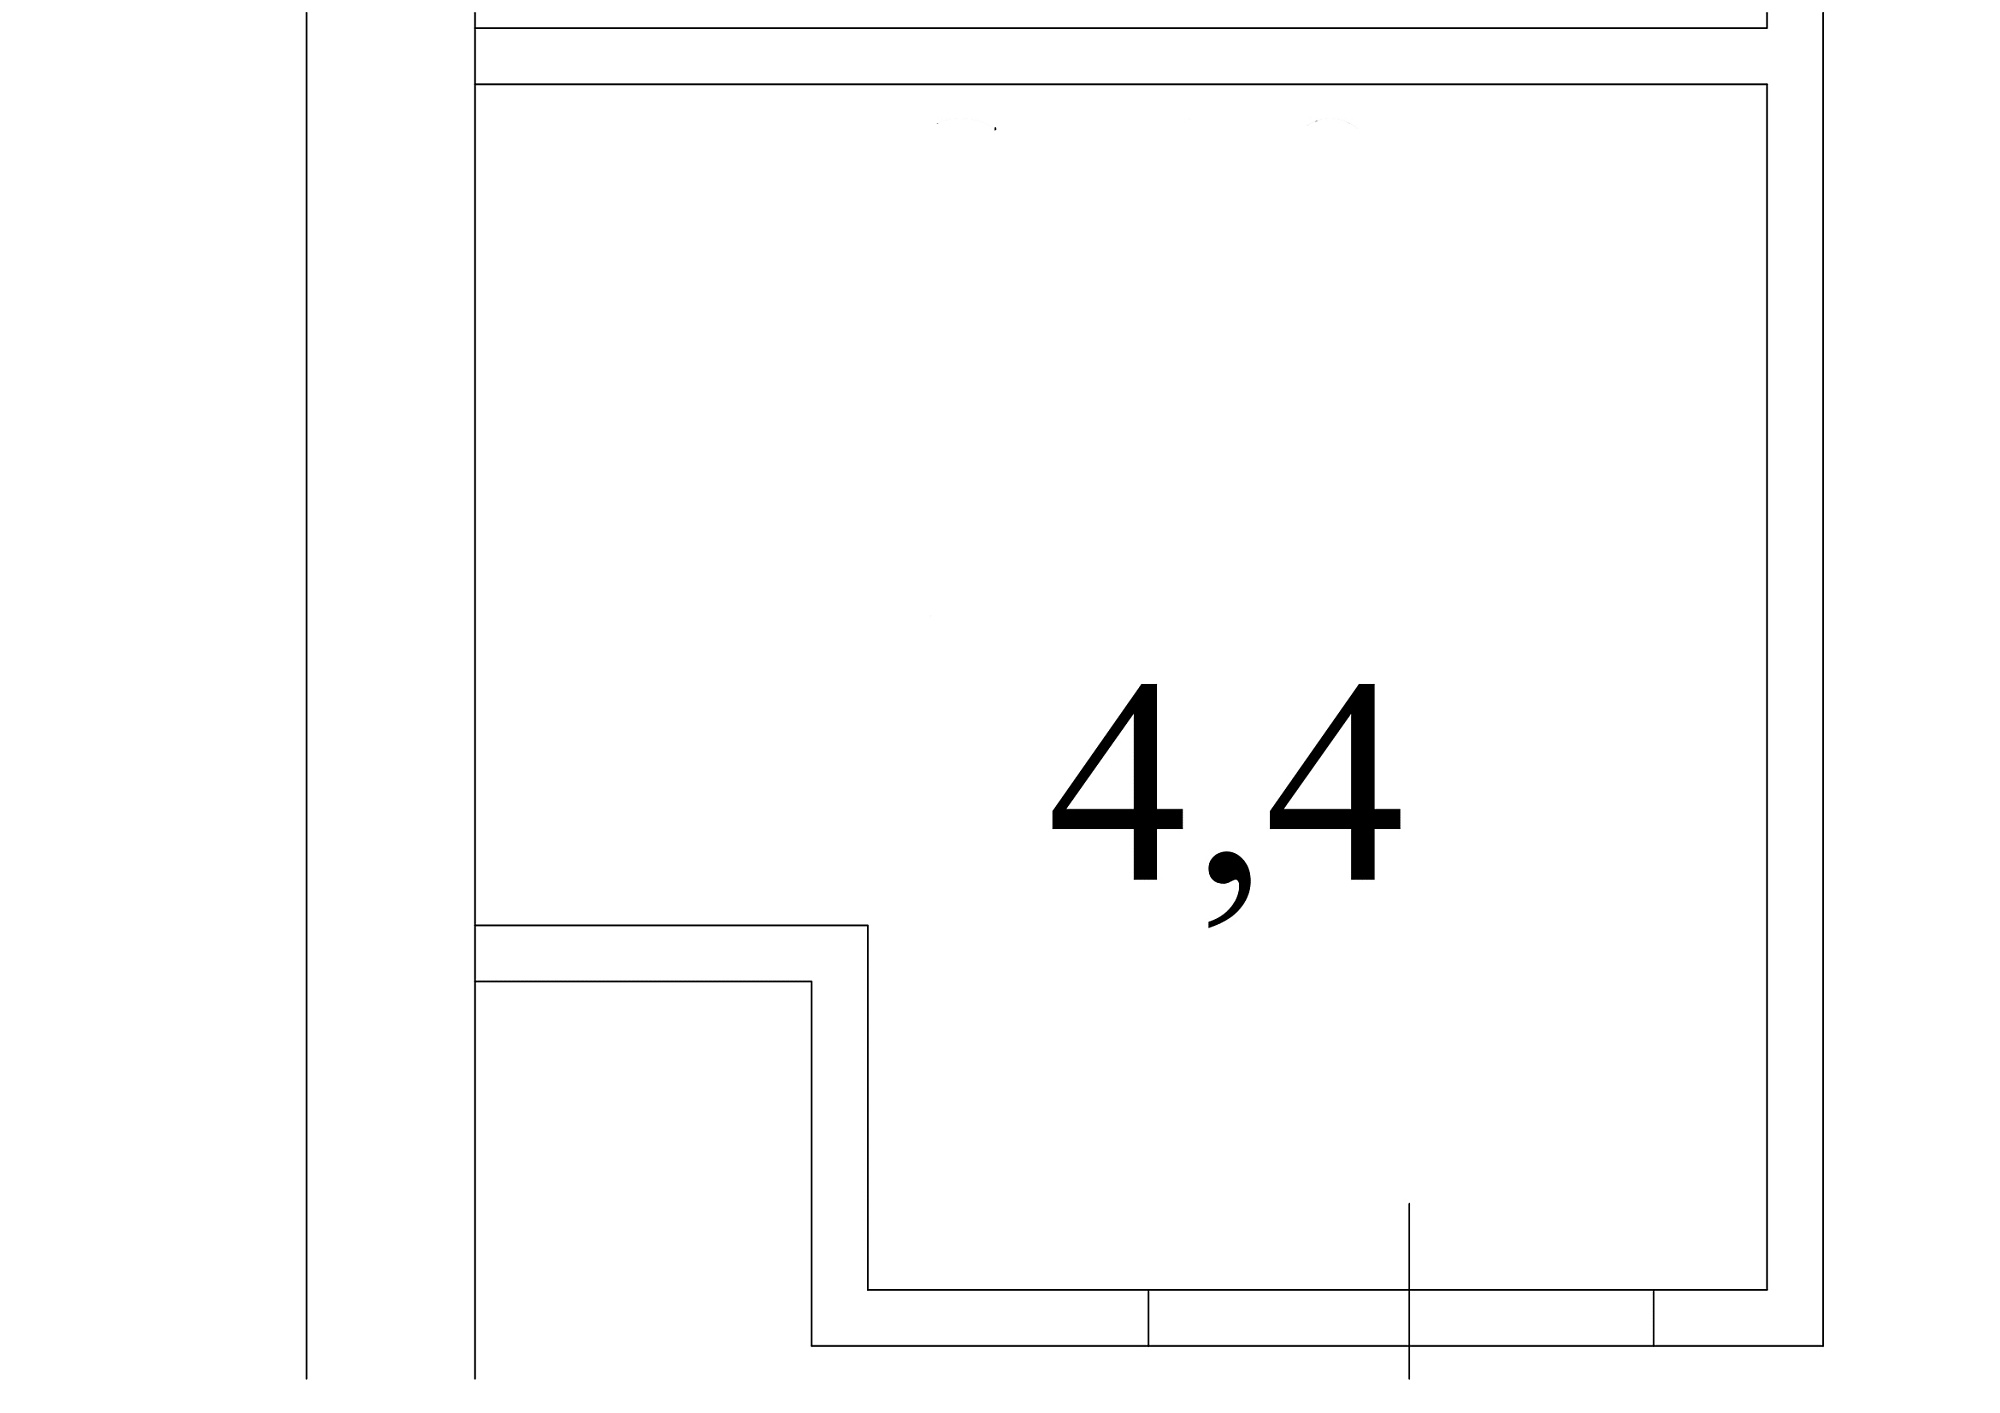 Planning Storeroom area 4.4m2, AB-13-м1/К0001.